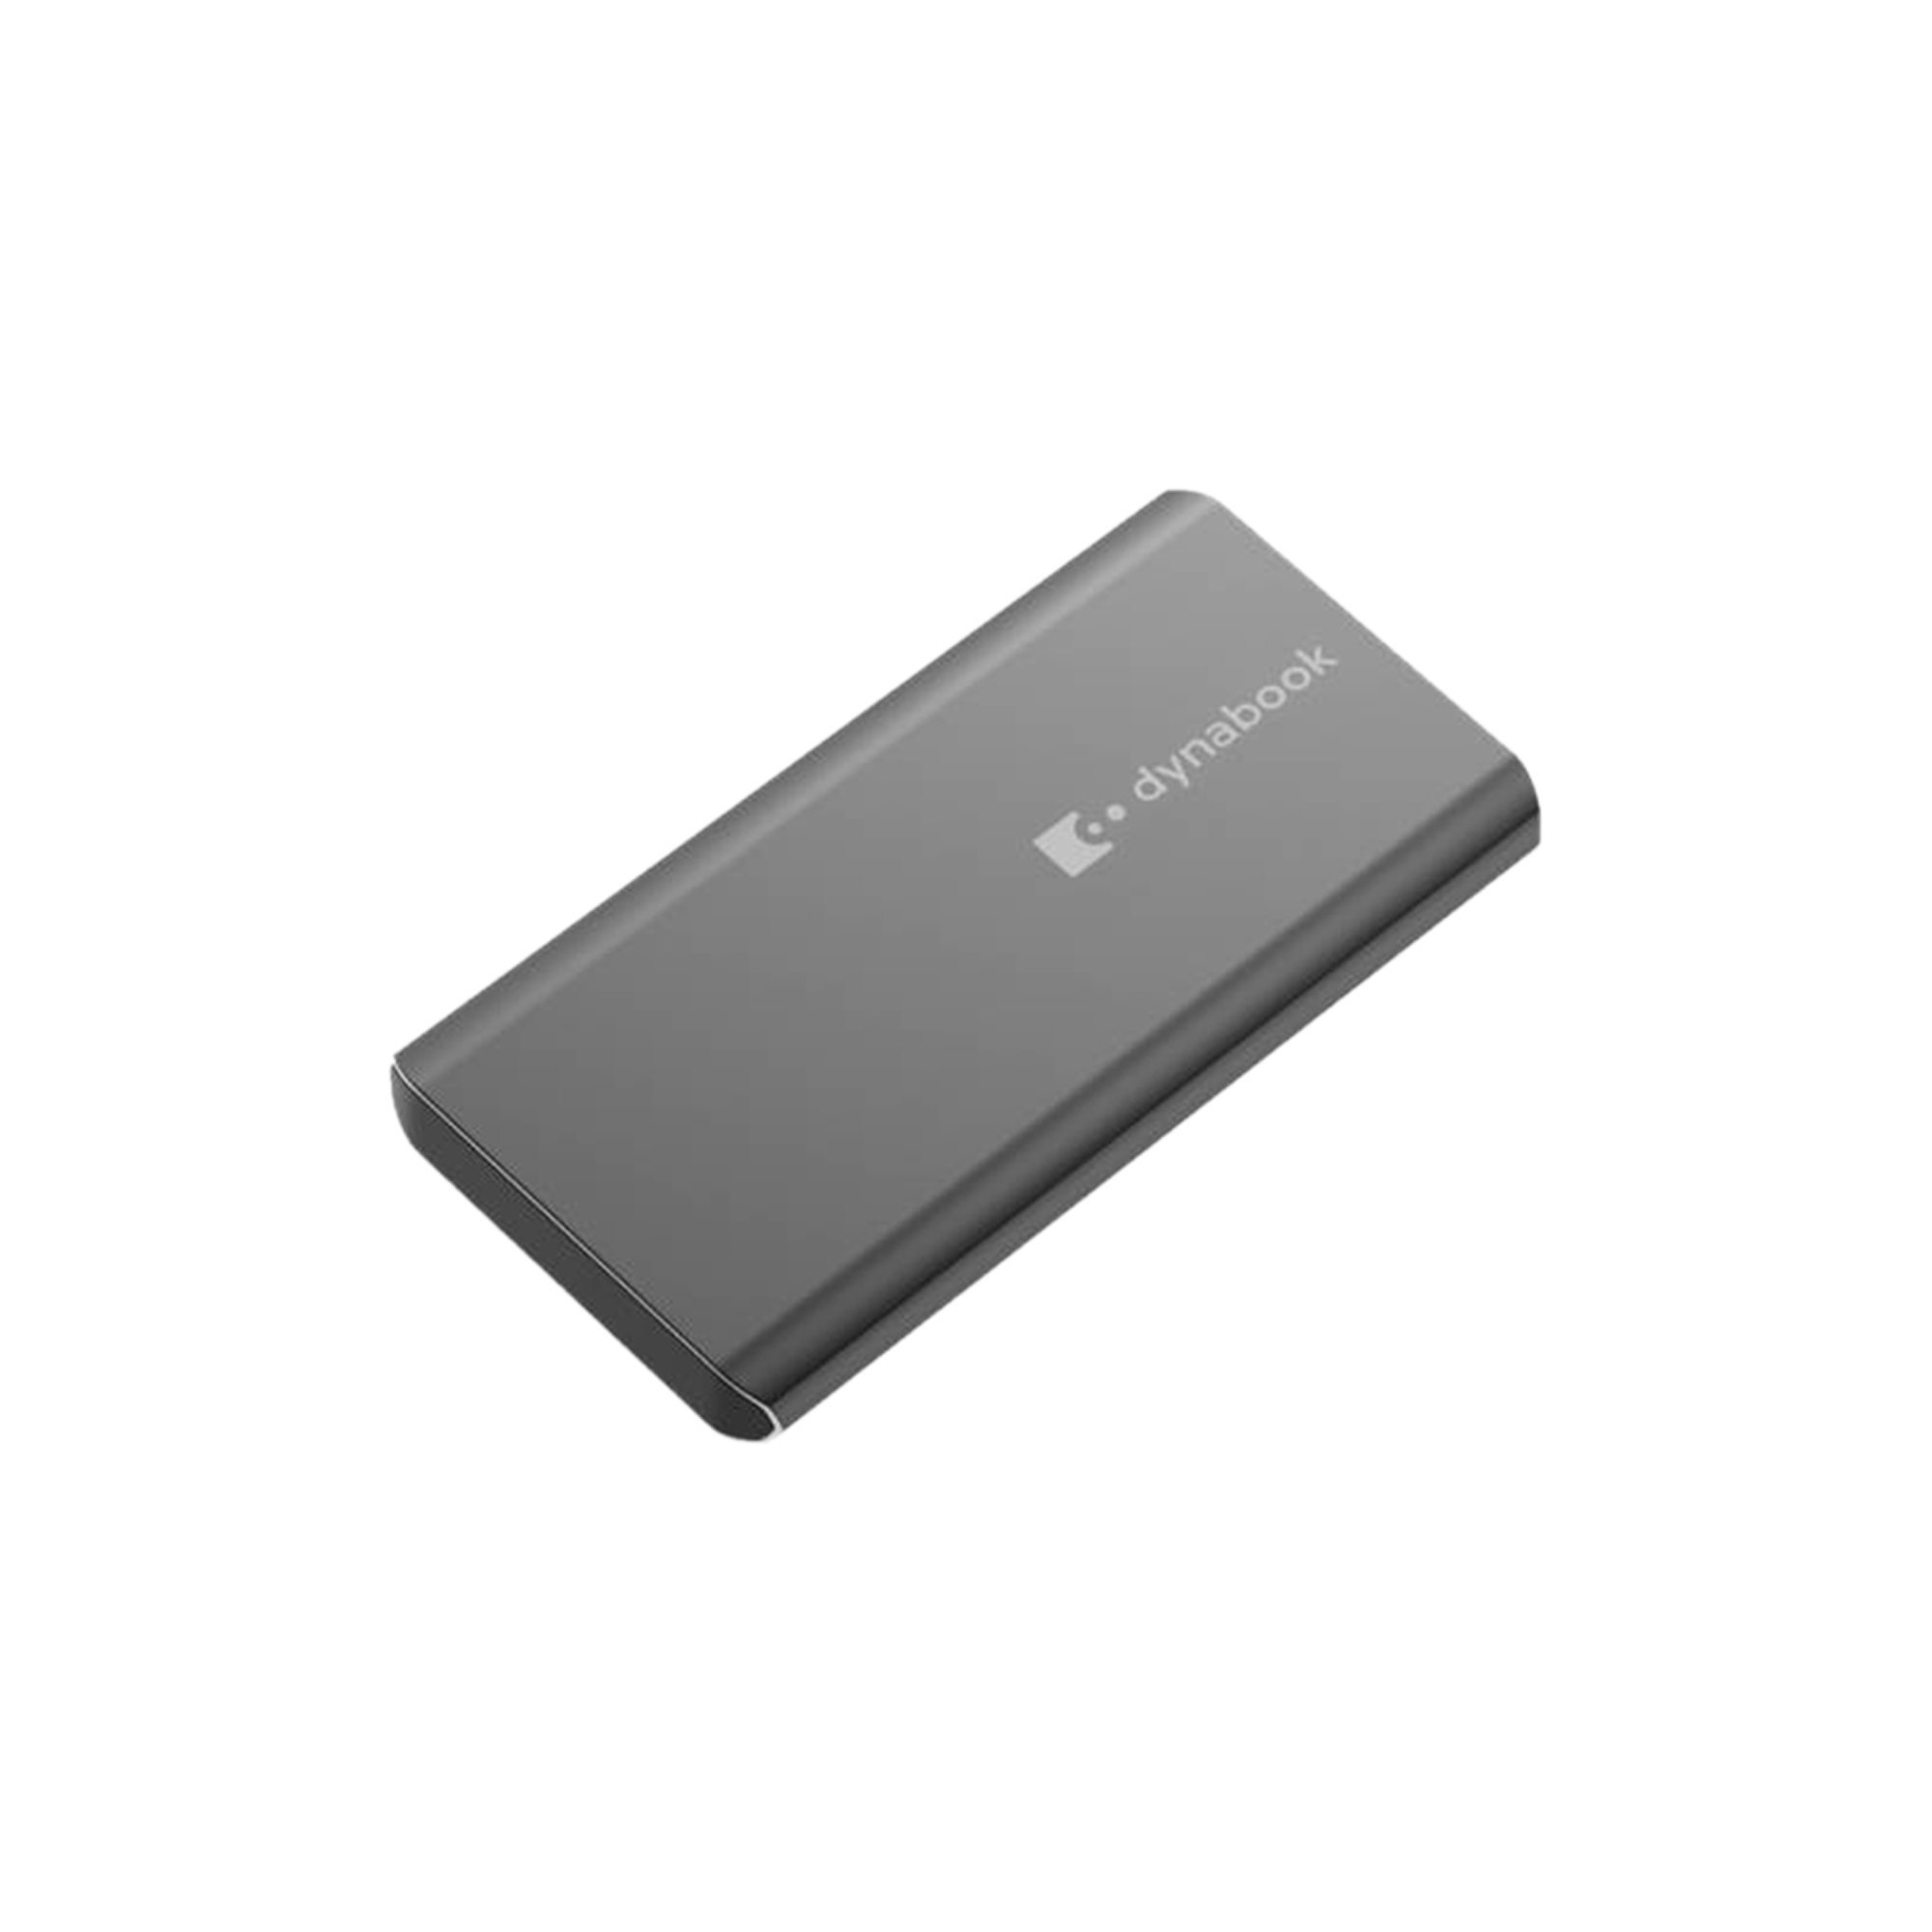 Dyanbook-Boost-X20-500Gb-Portable-SSD-1